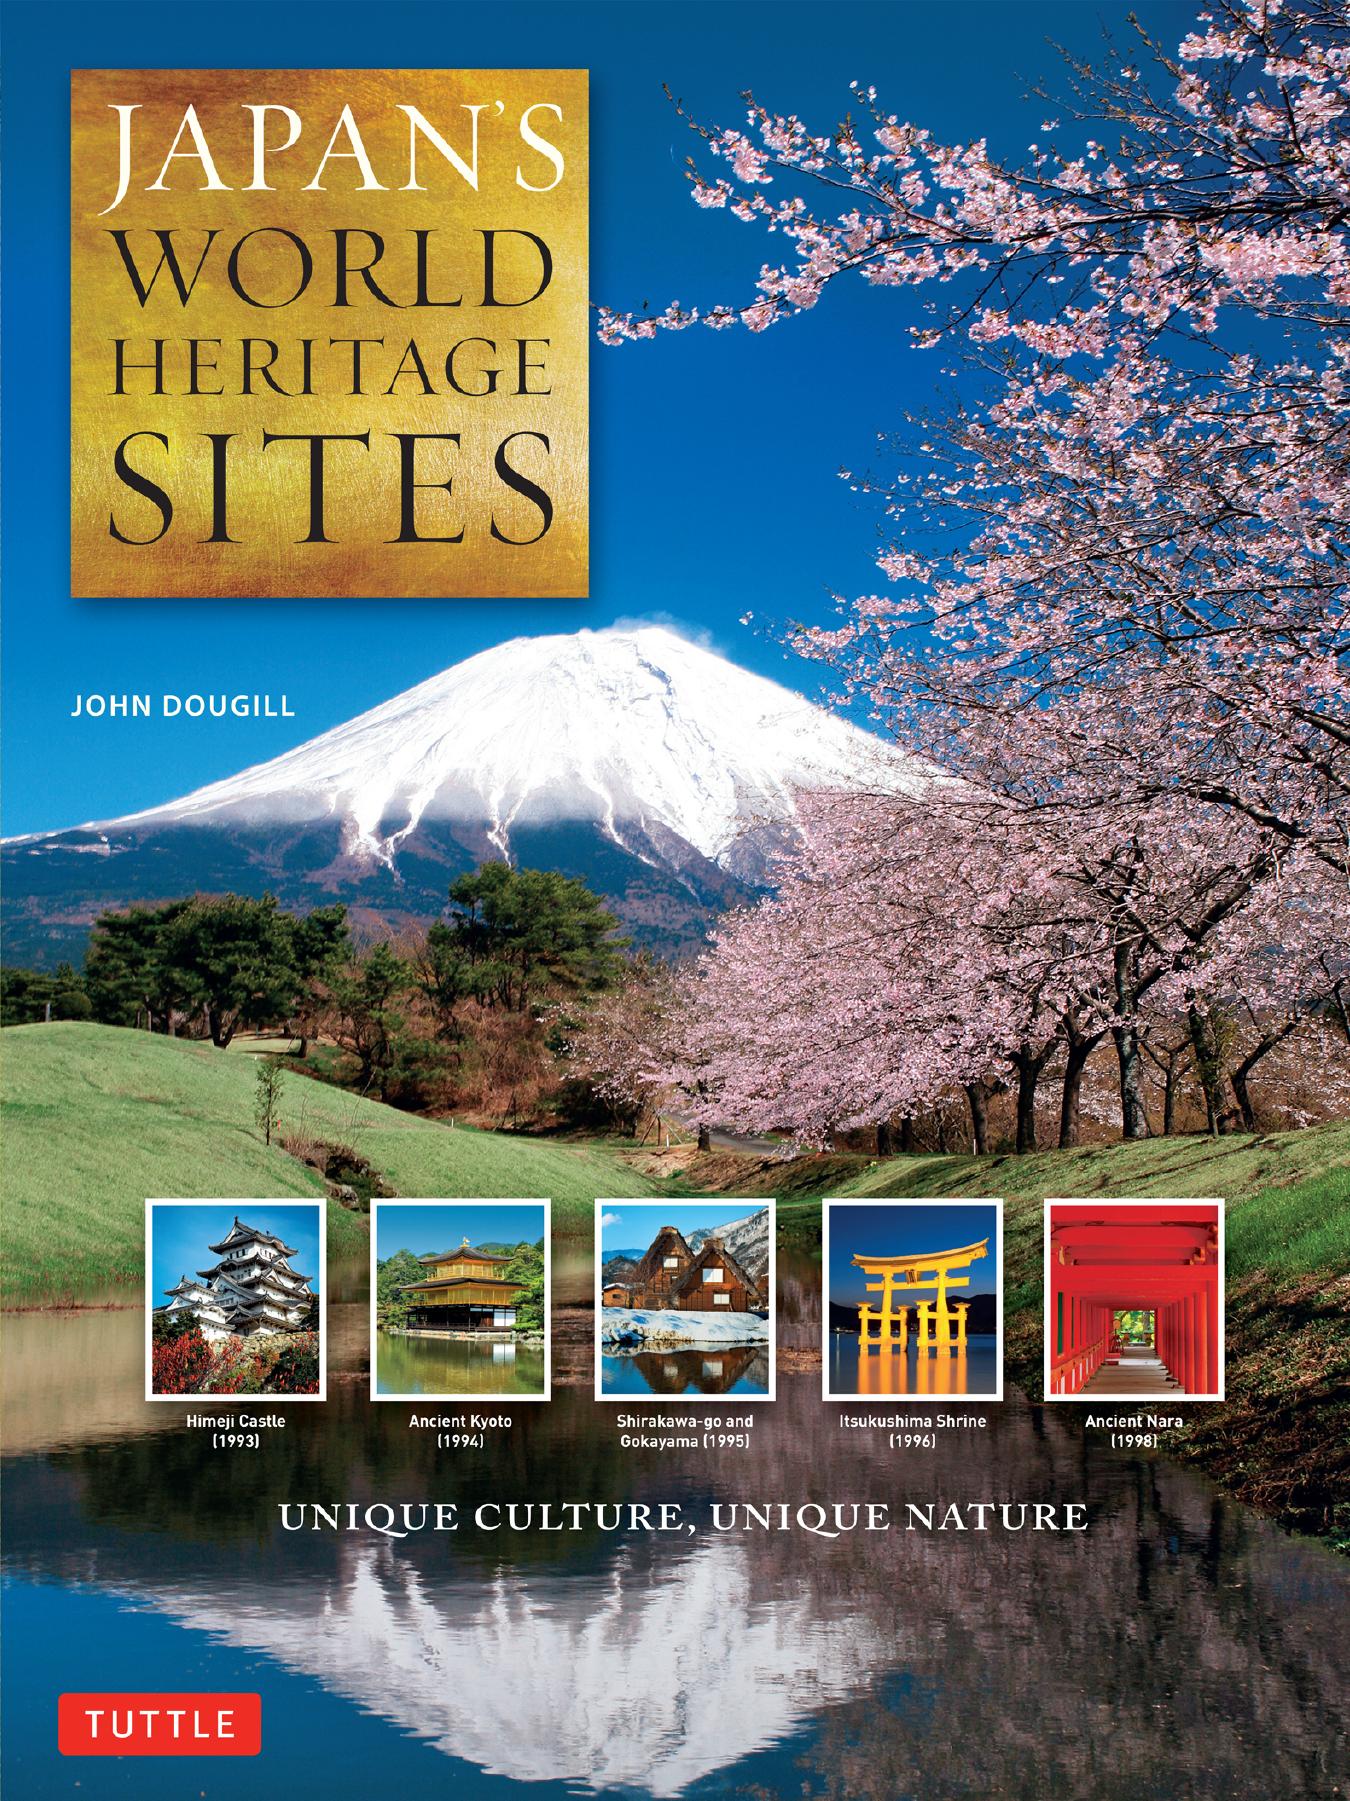 Japan's World Heritage Sites by John Dougill